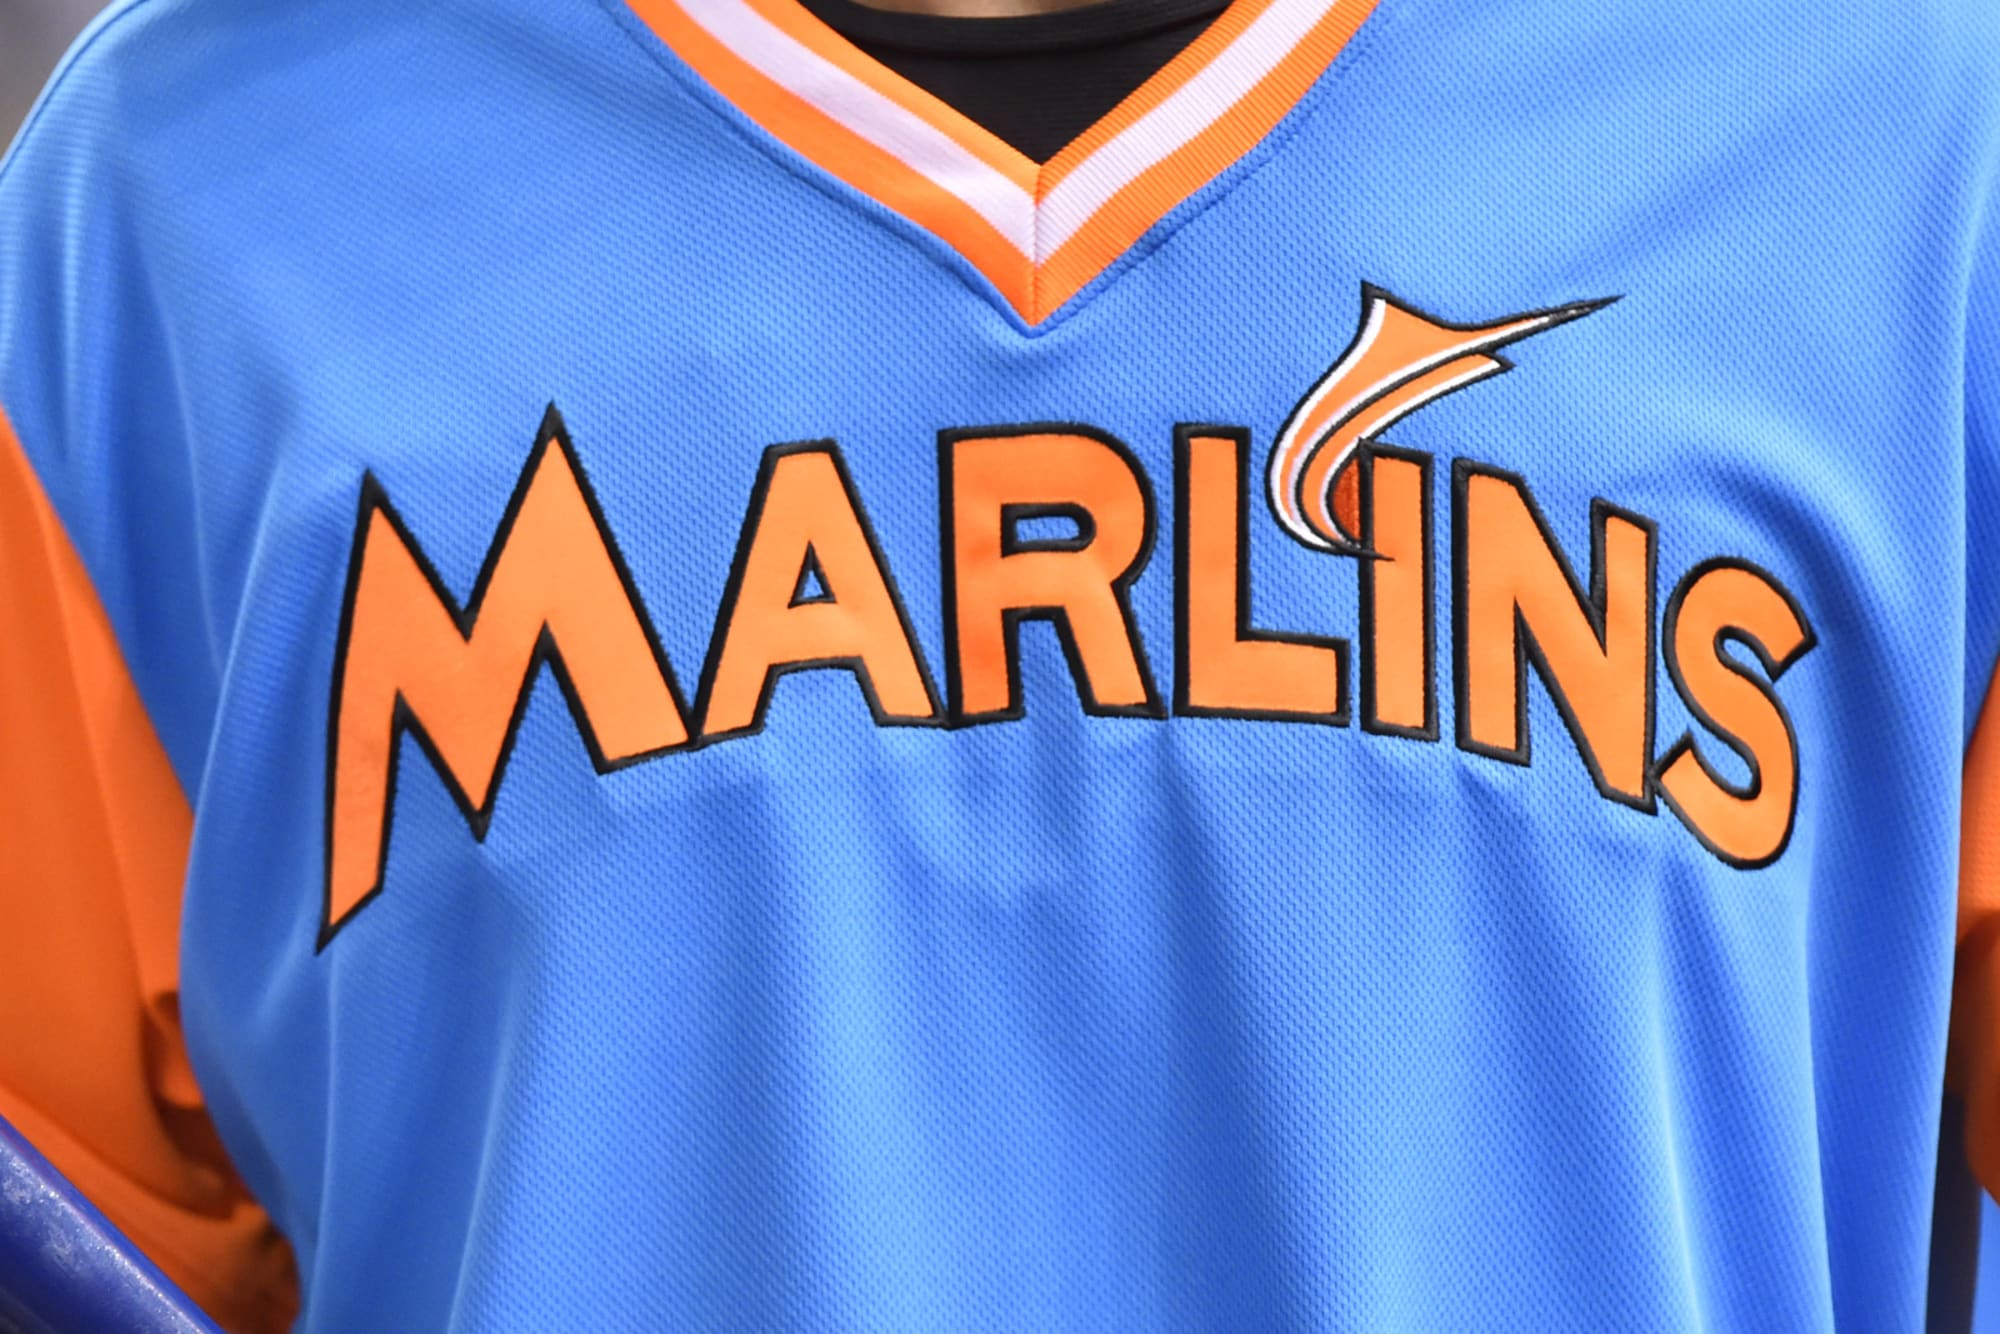 The Miami Marlins' new uniforms, graded 